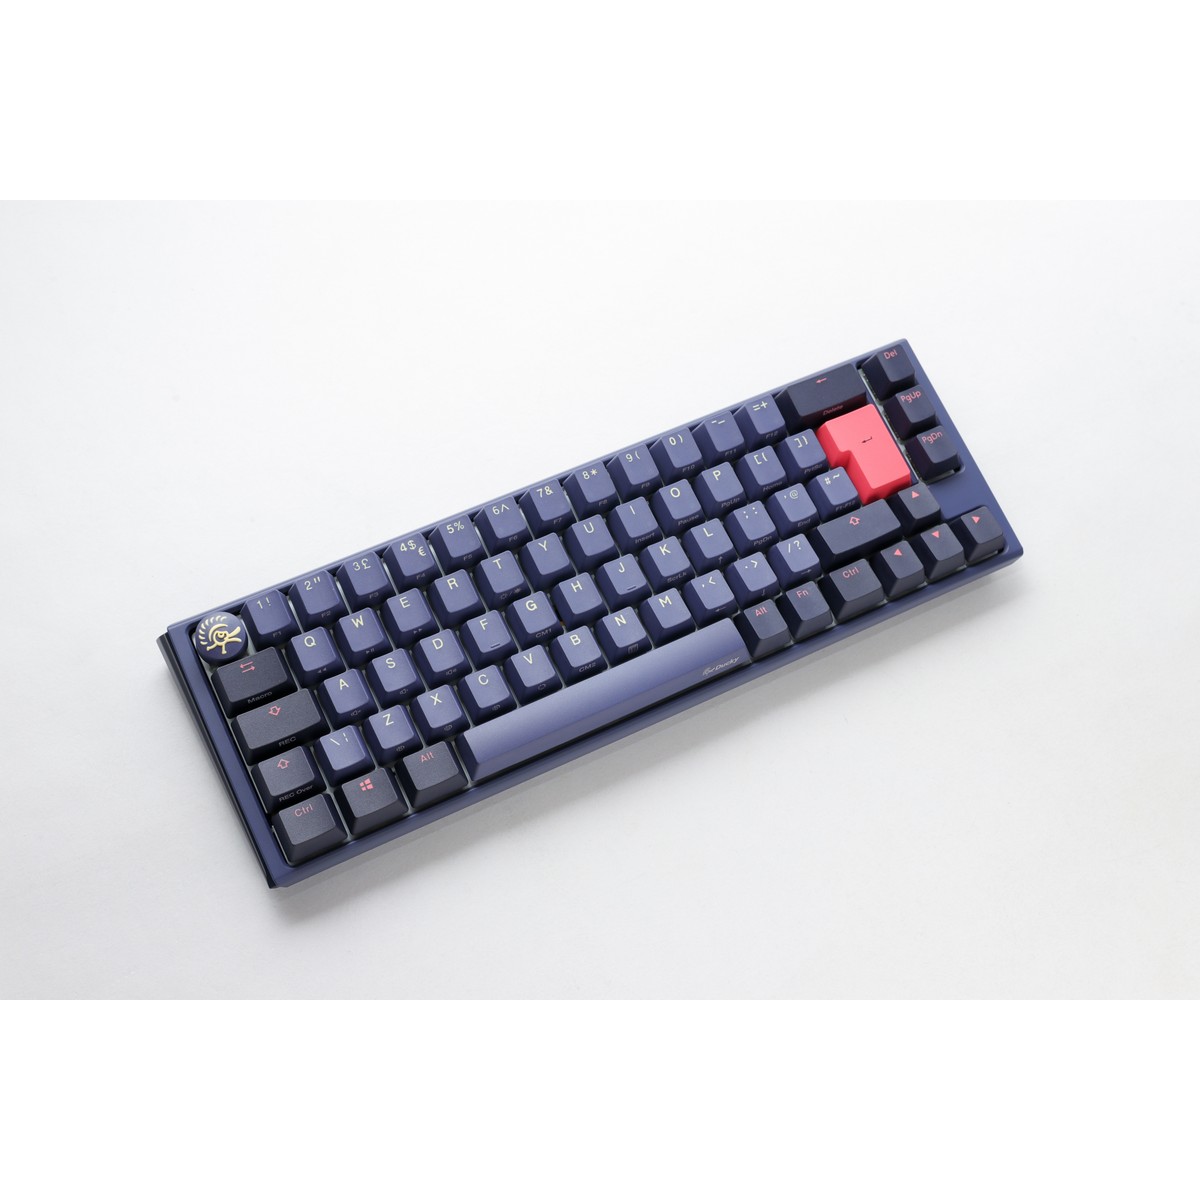 Ducky - Ducky One 3 Cosmic SF 65% USB RGB Mechanical Gaming Keyboard Cherry MX Blue Switch - UK Layout